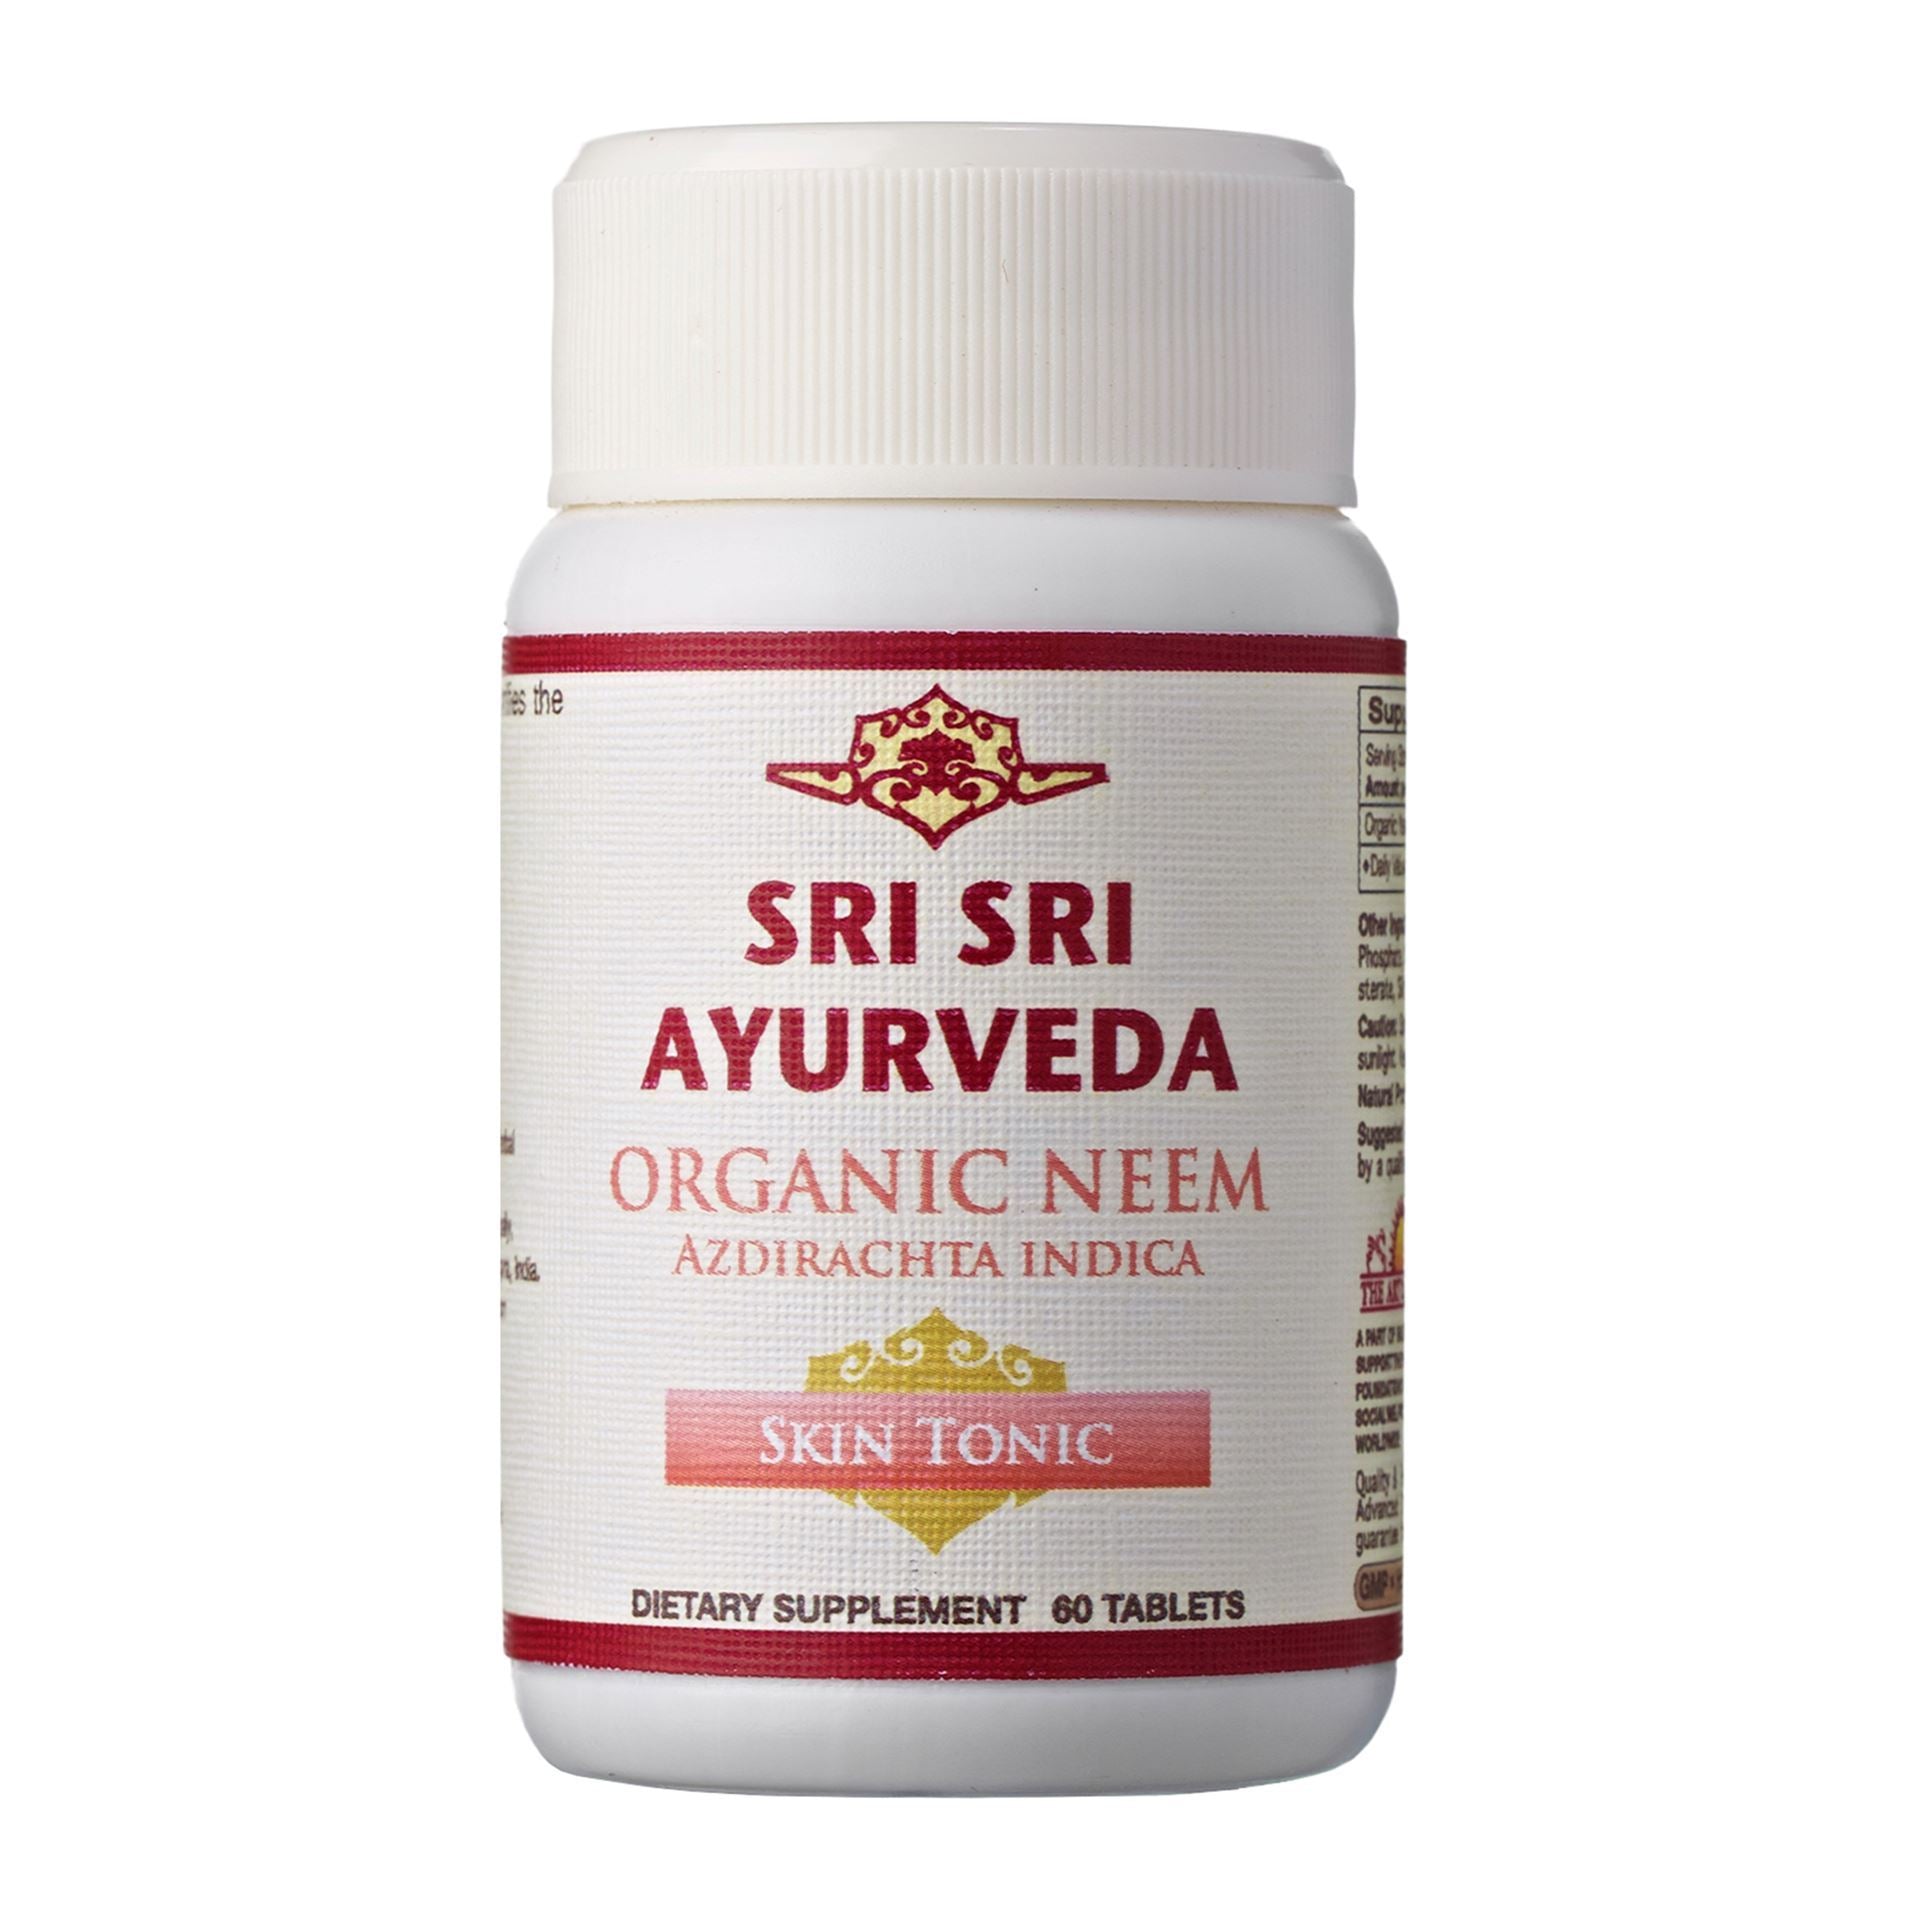 Sri Sri Ayurveda Organic Neem Tablet